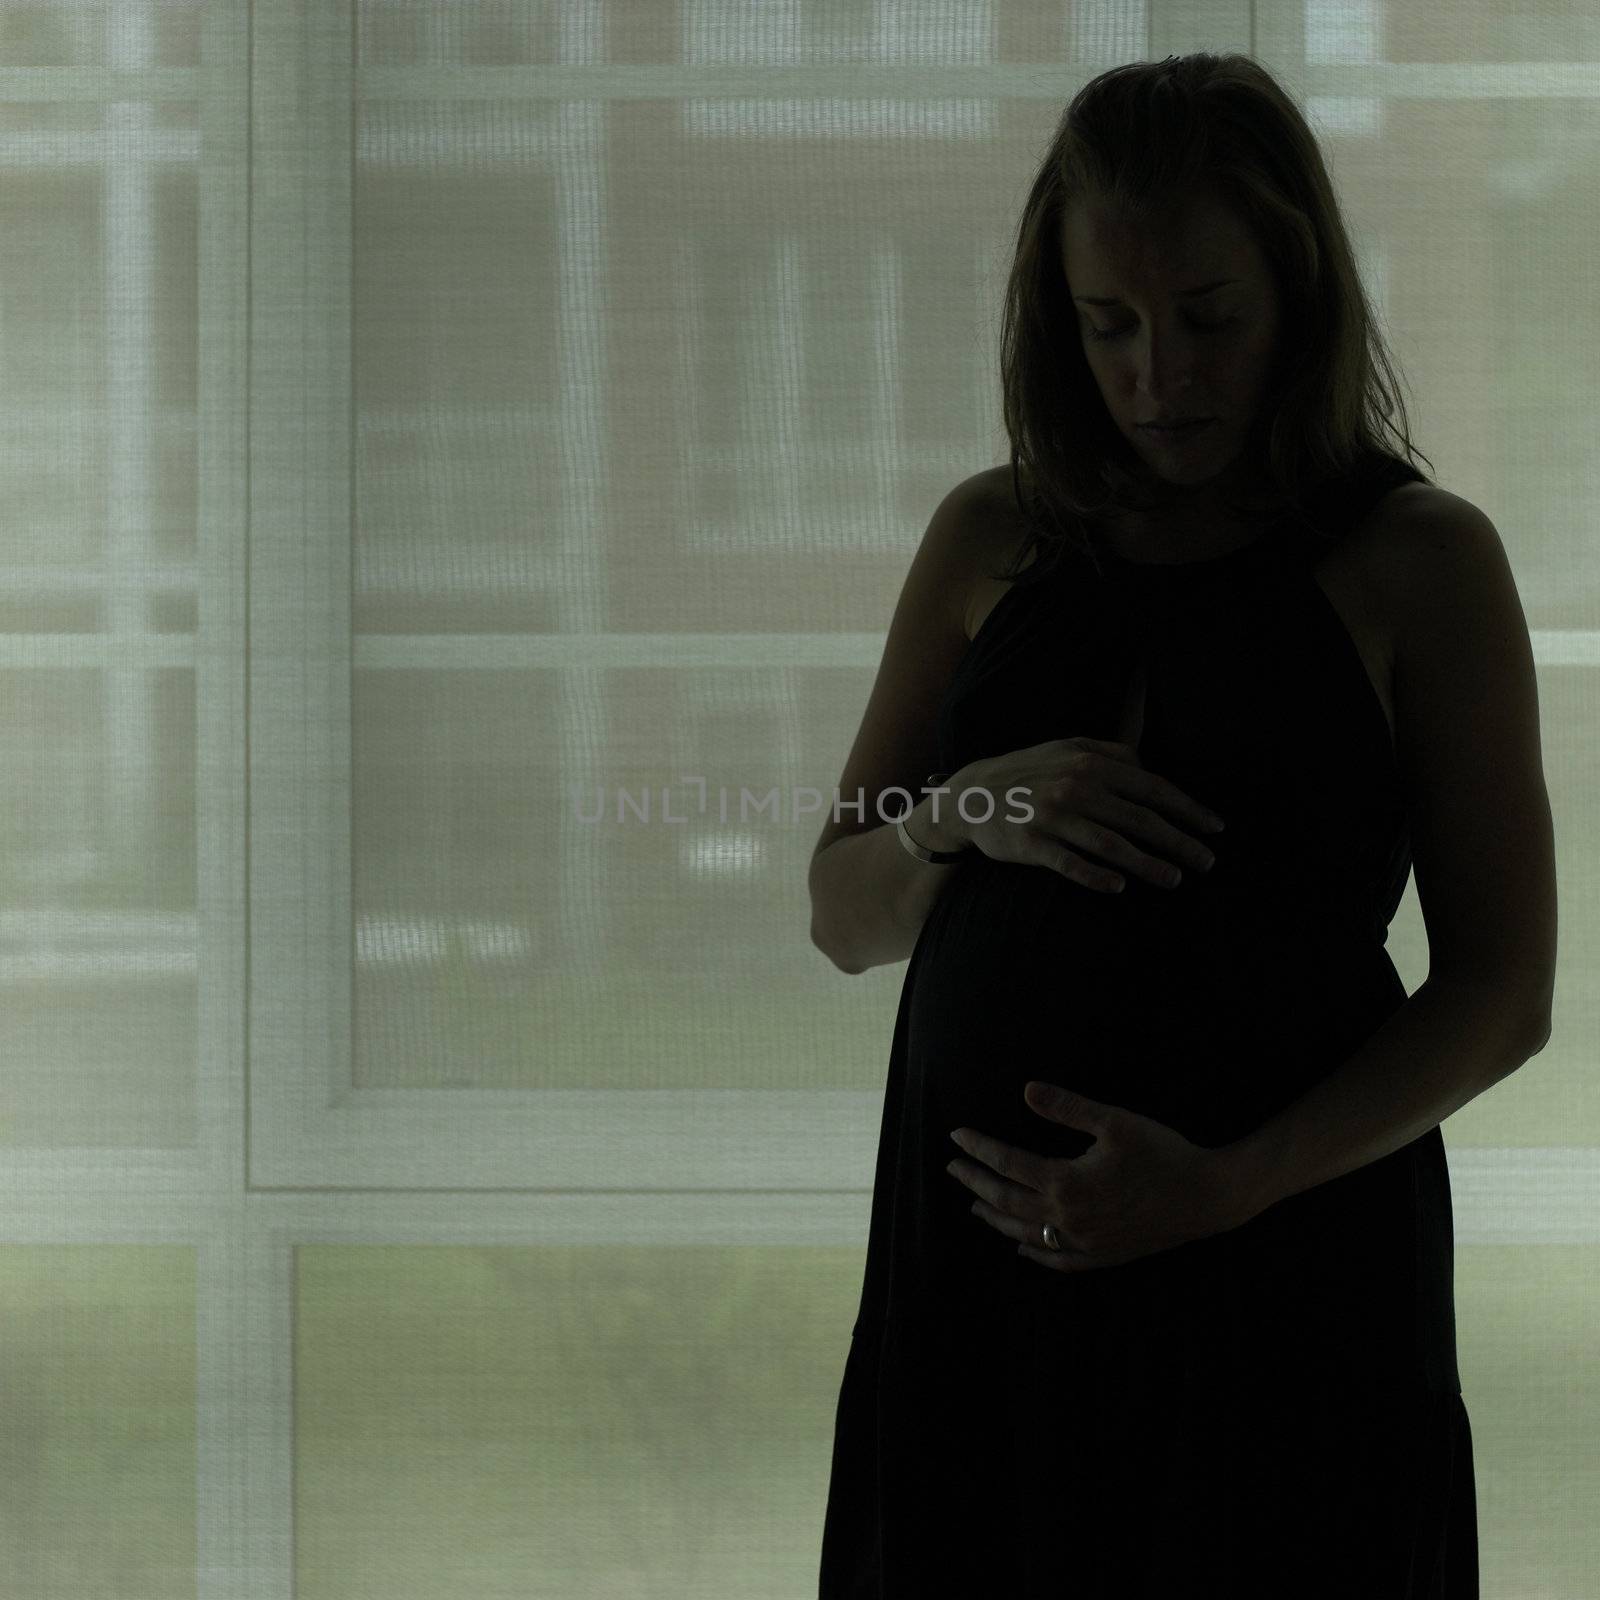 Pregnant woman silhouette